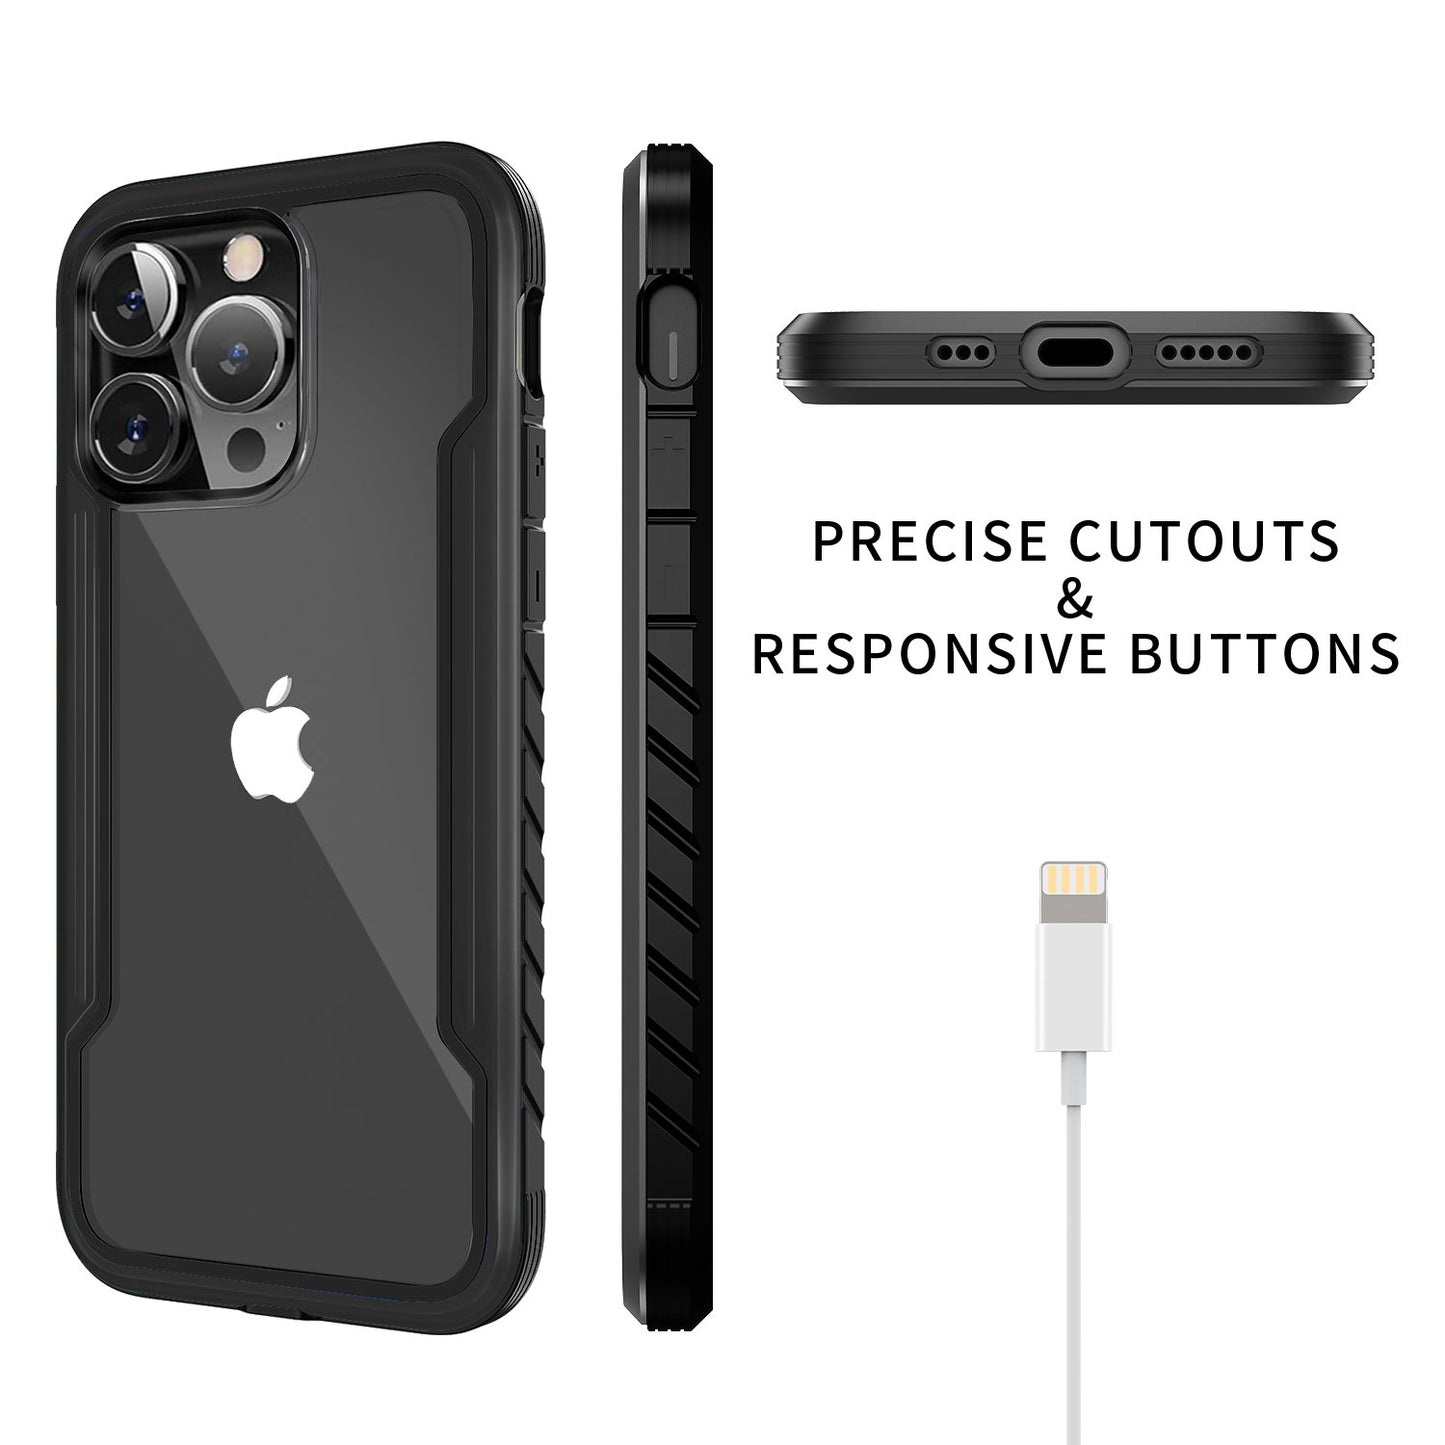 Tough On iPhone 14 Pro Case Iron Shield Black